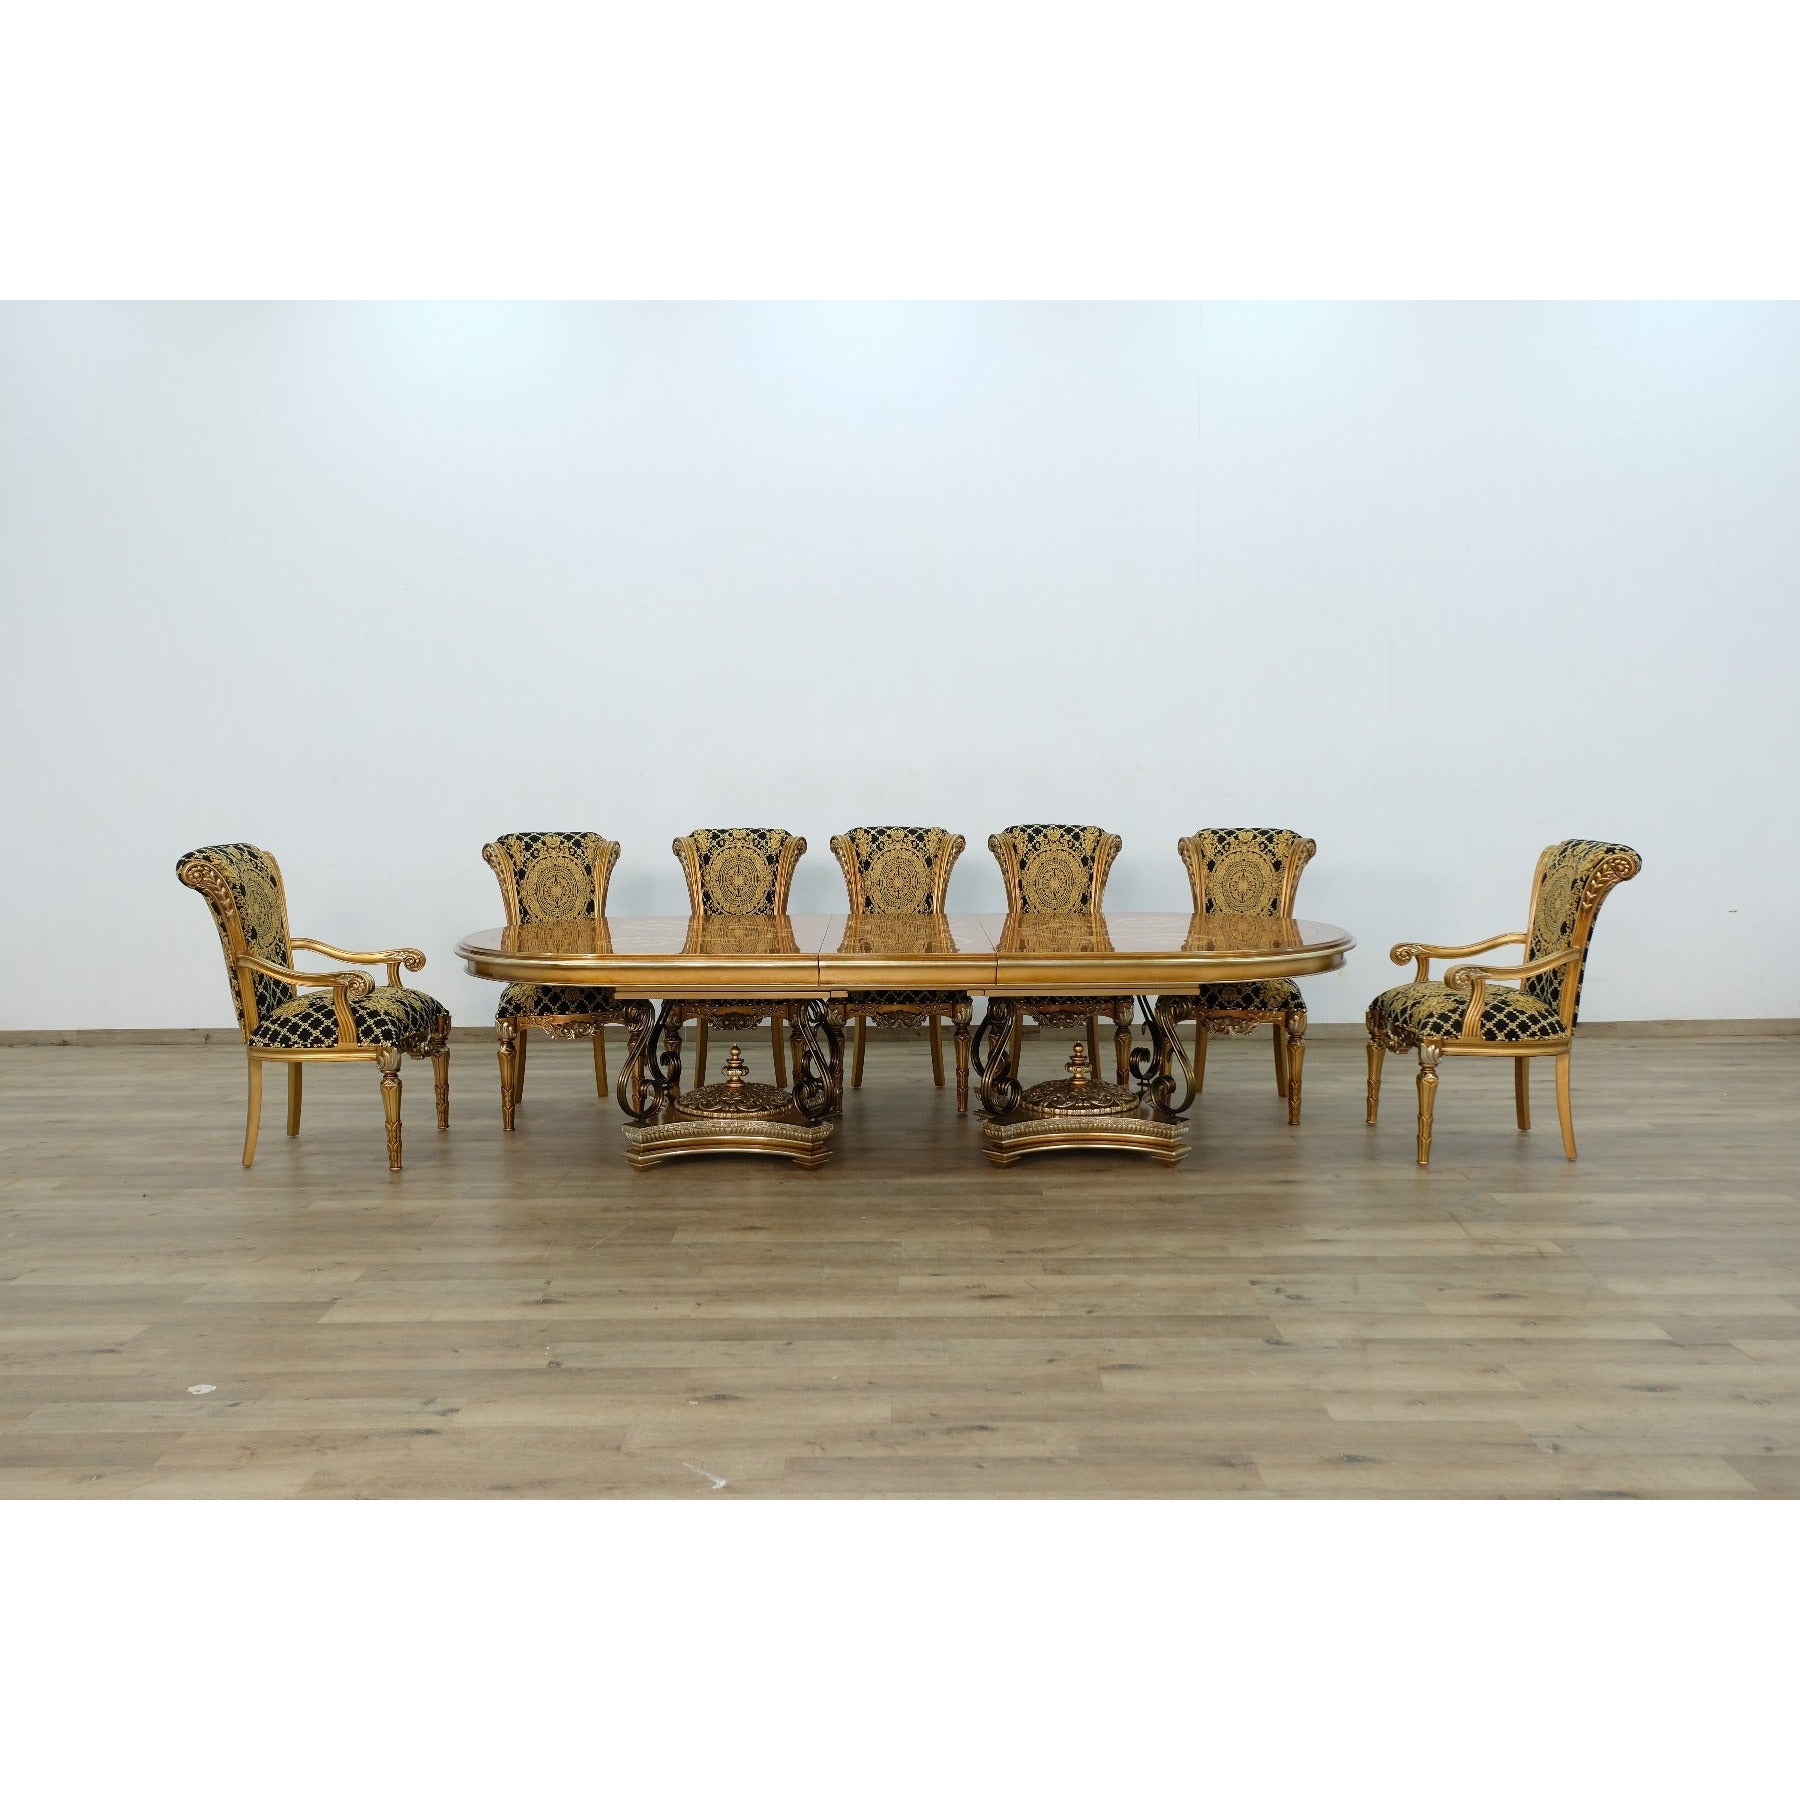 European Furniture - Valentina 9 Piece Dining Room Set in Black and Gold Leaf - 61958-9SET - New Star Living